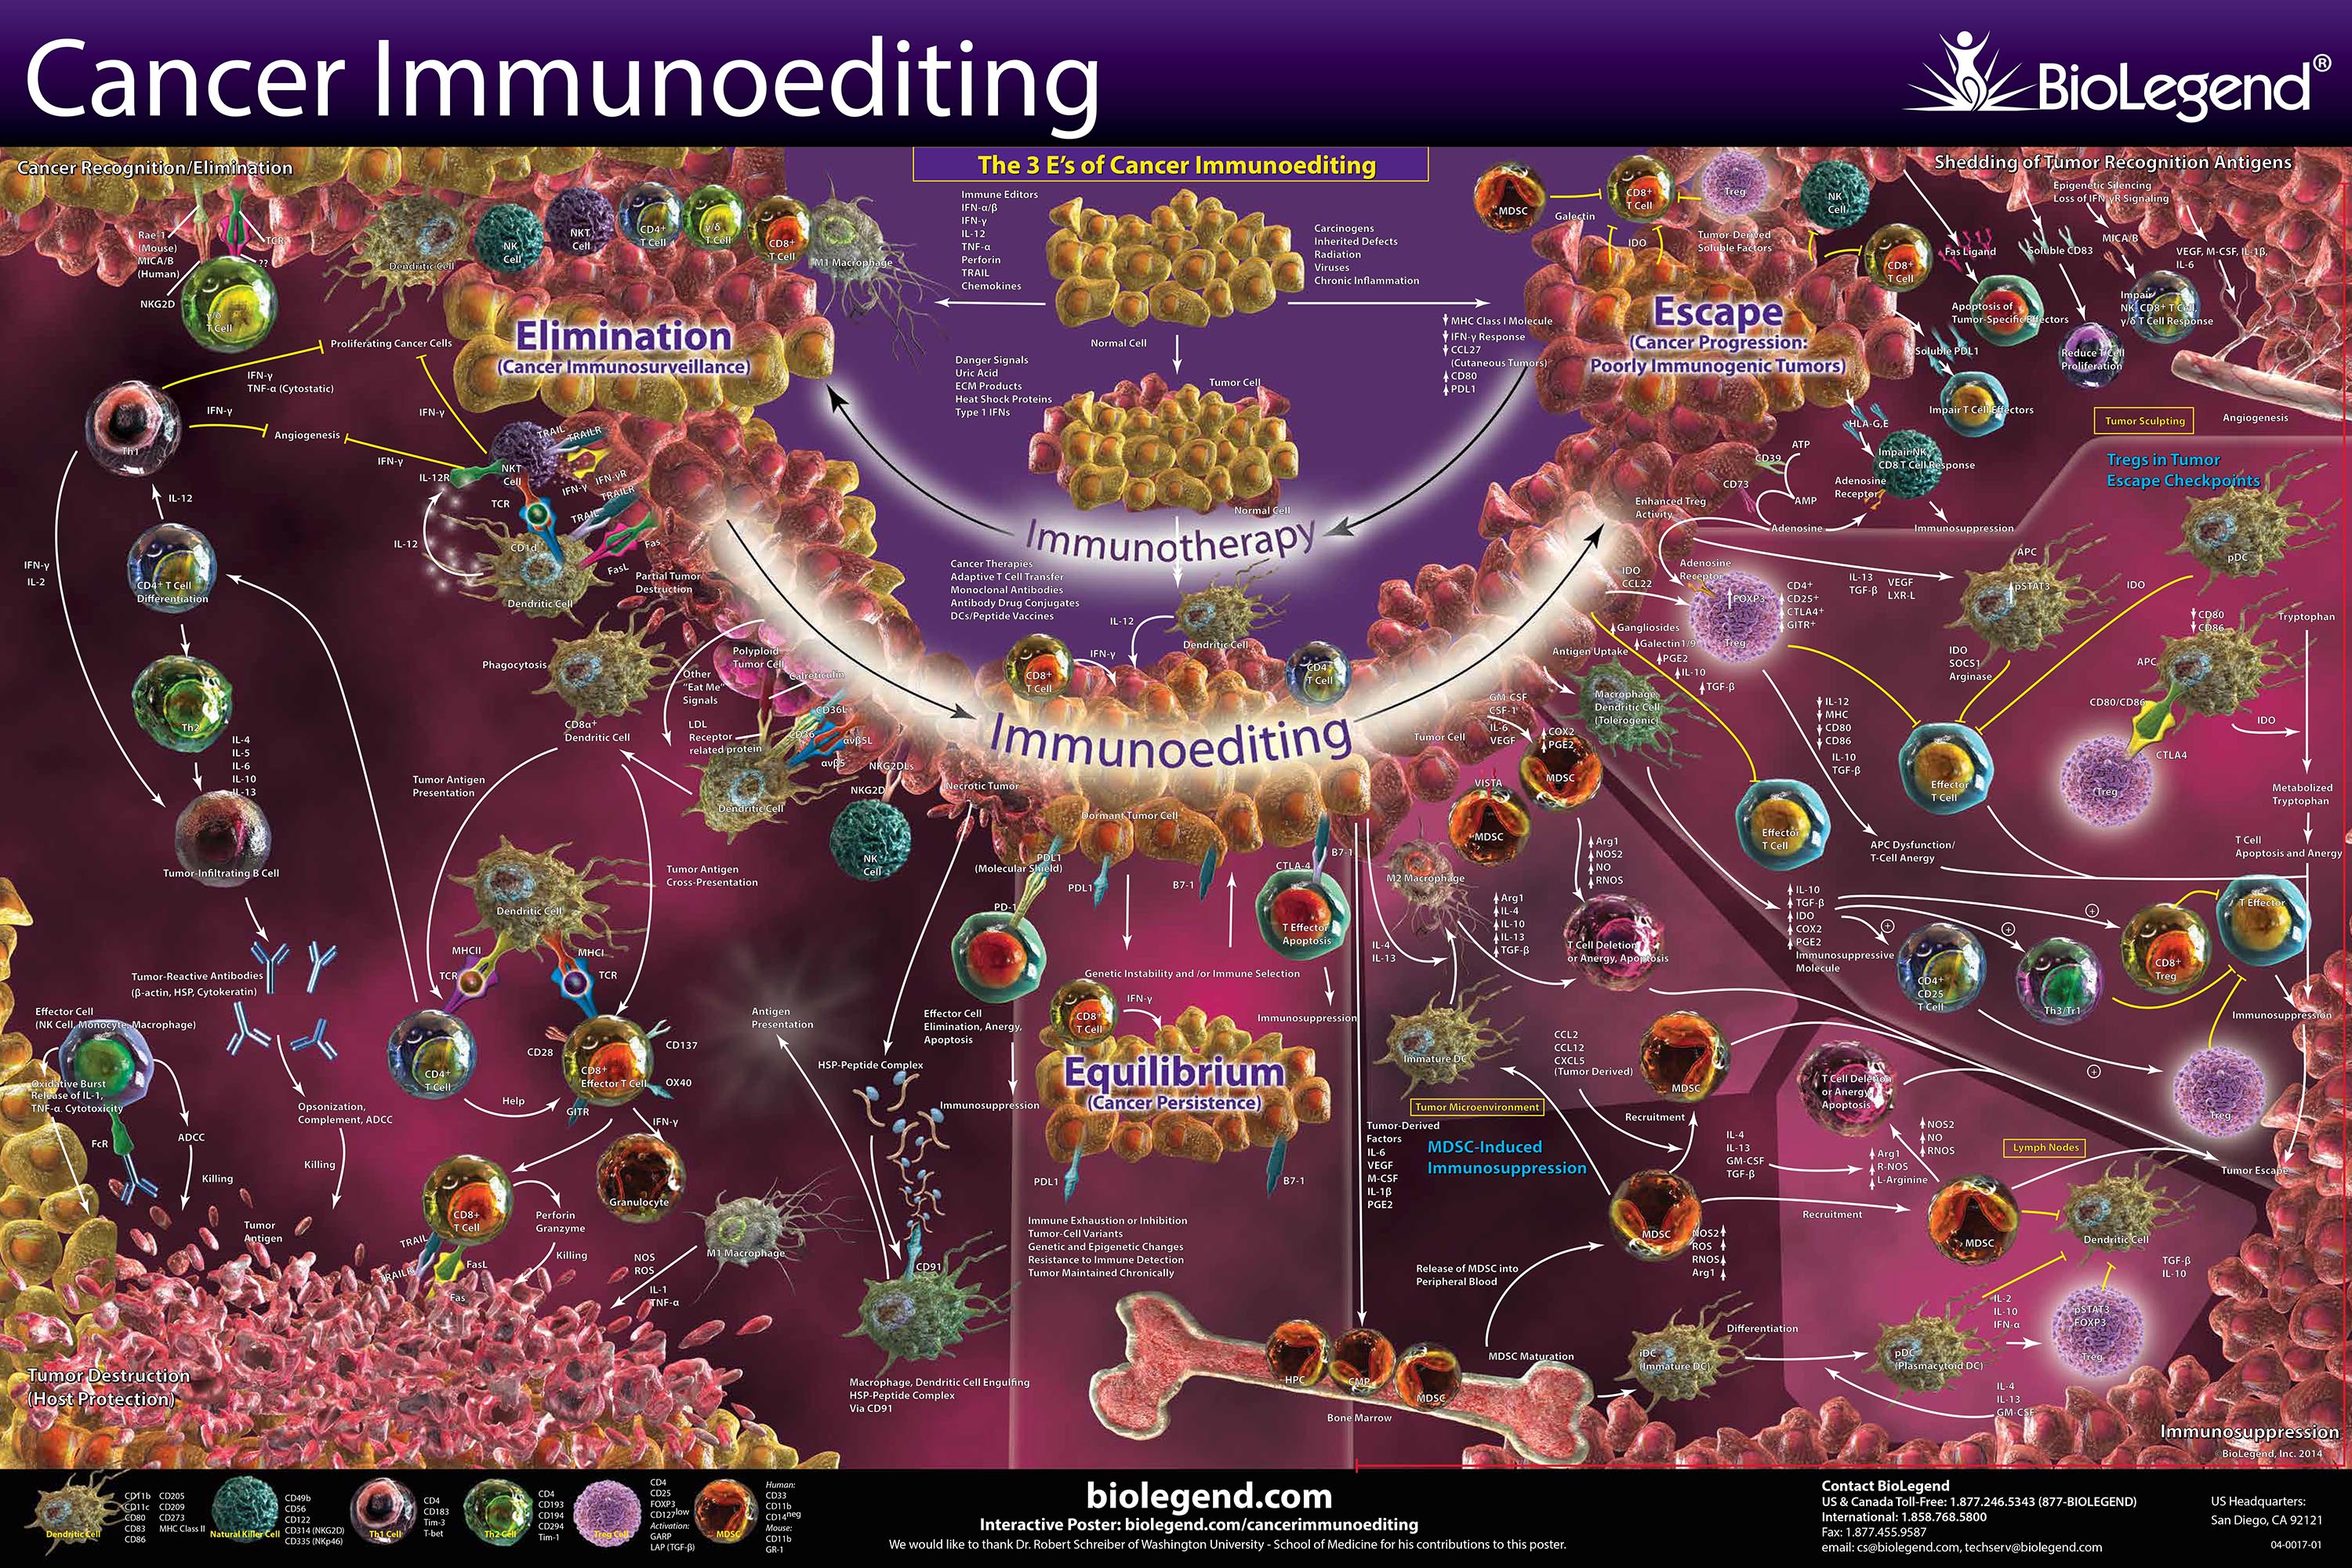 Cancer Immunoediting